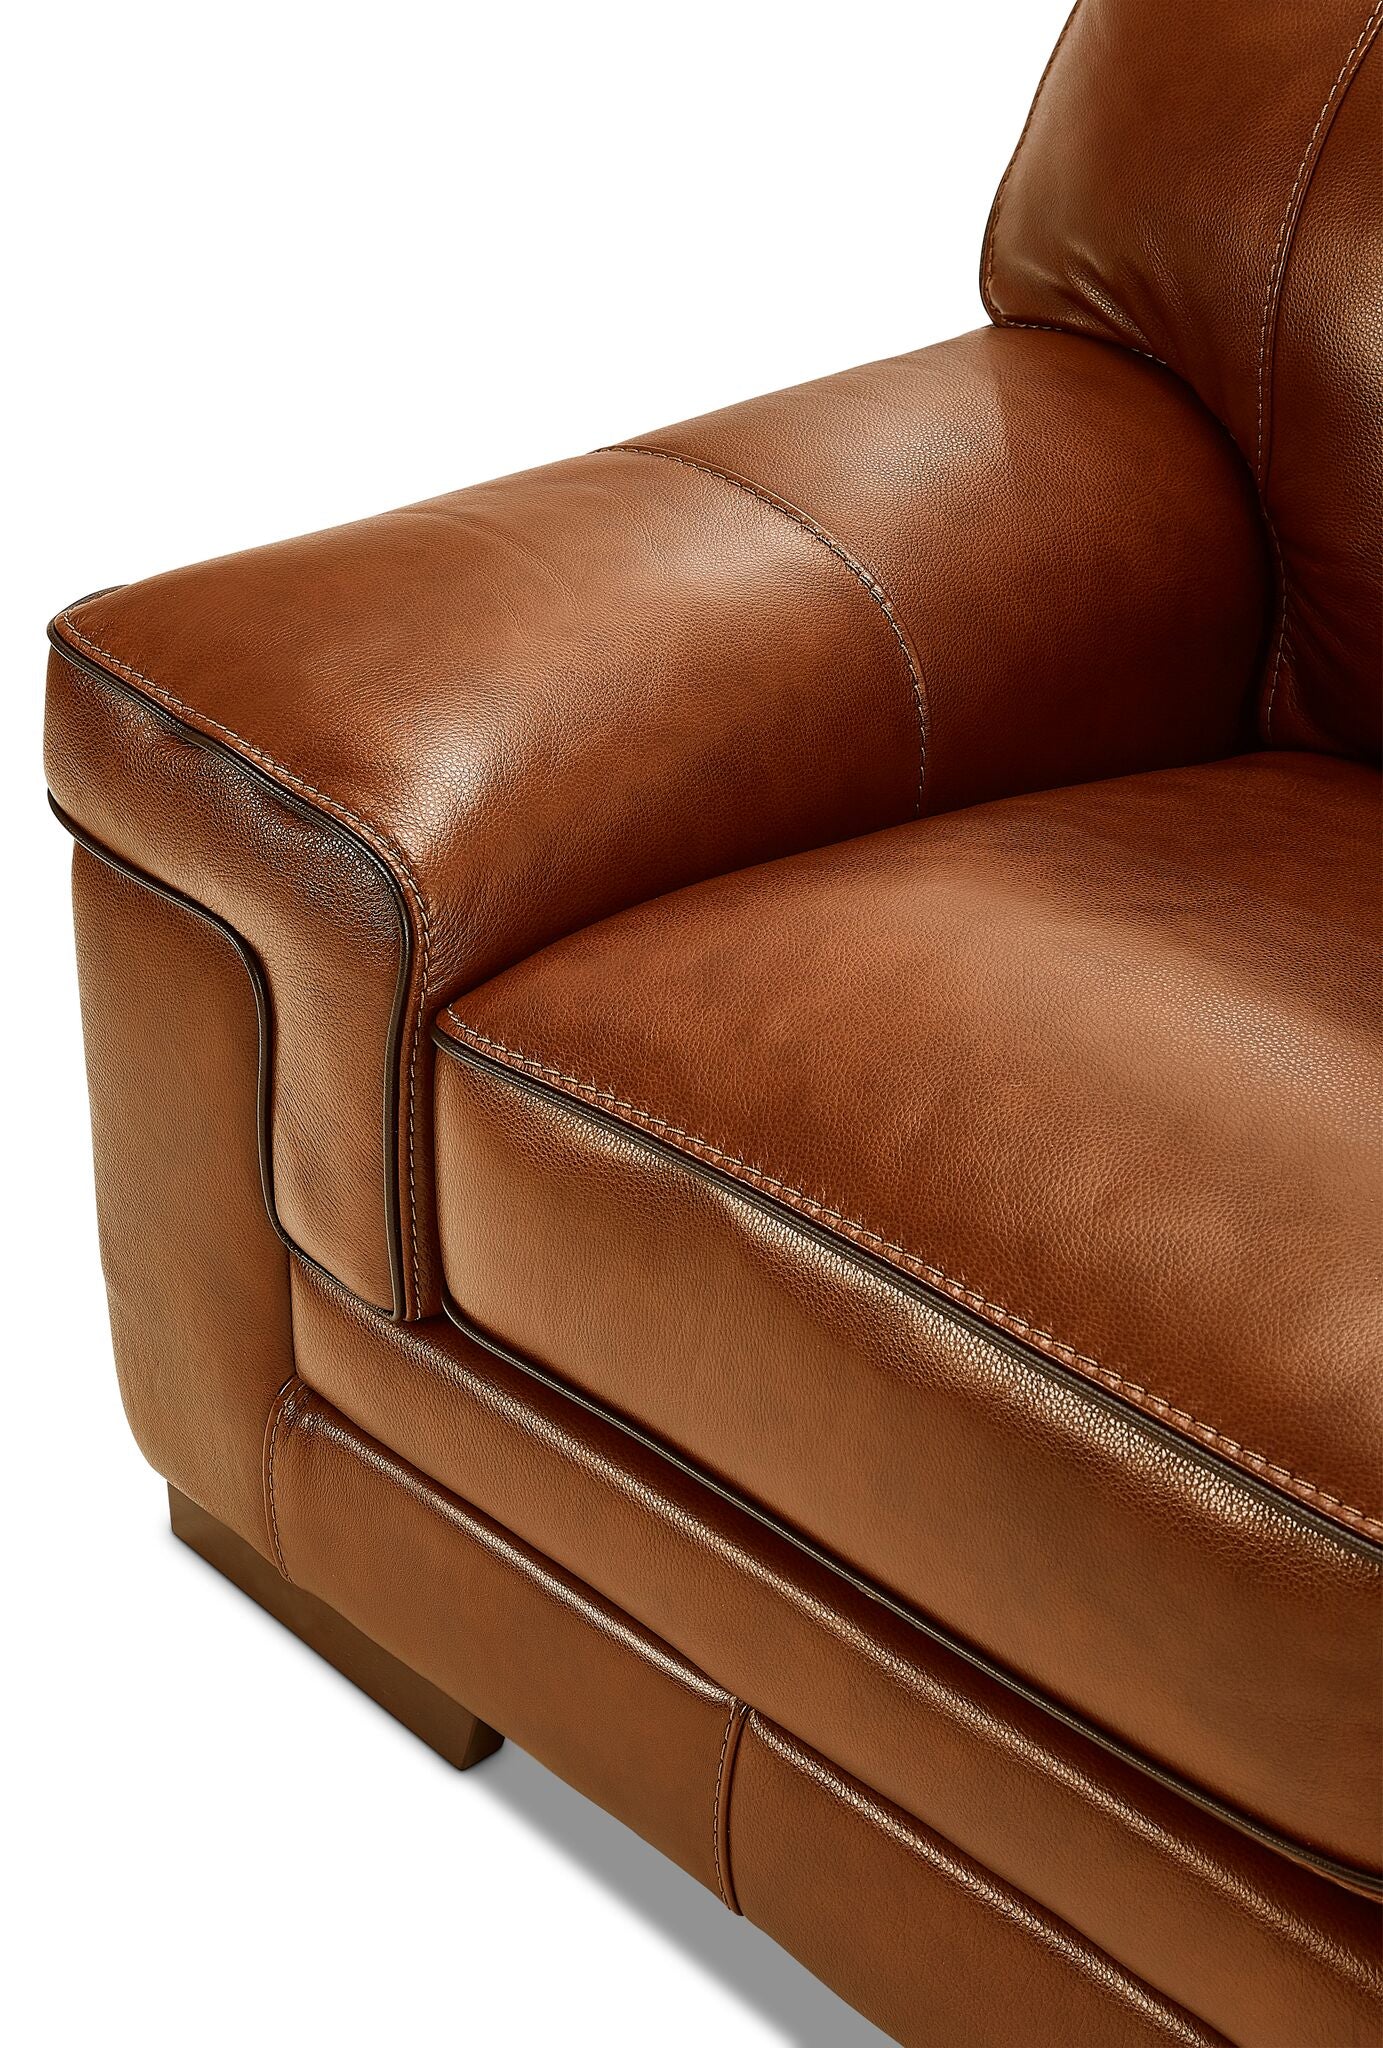 Stampede Leather Sofa and Loveseat Set - Chestnut